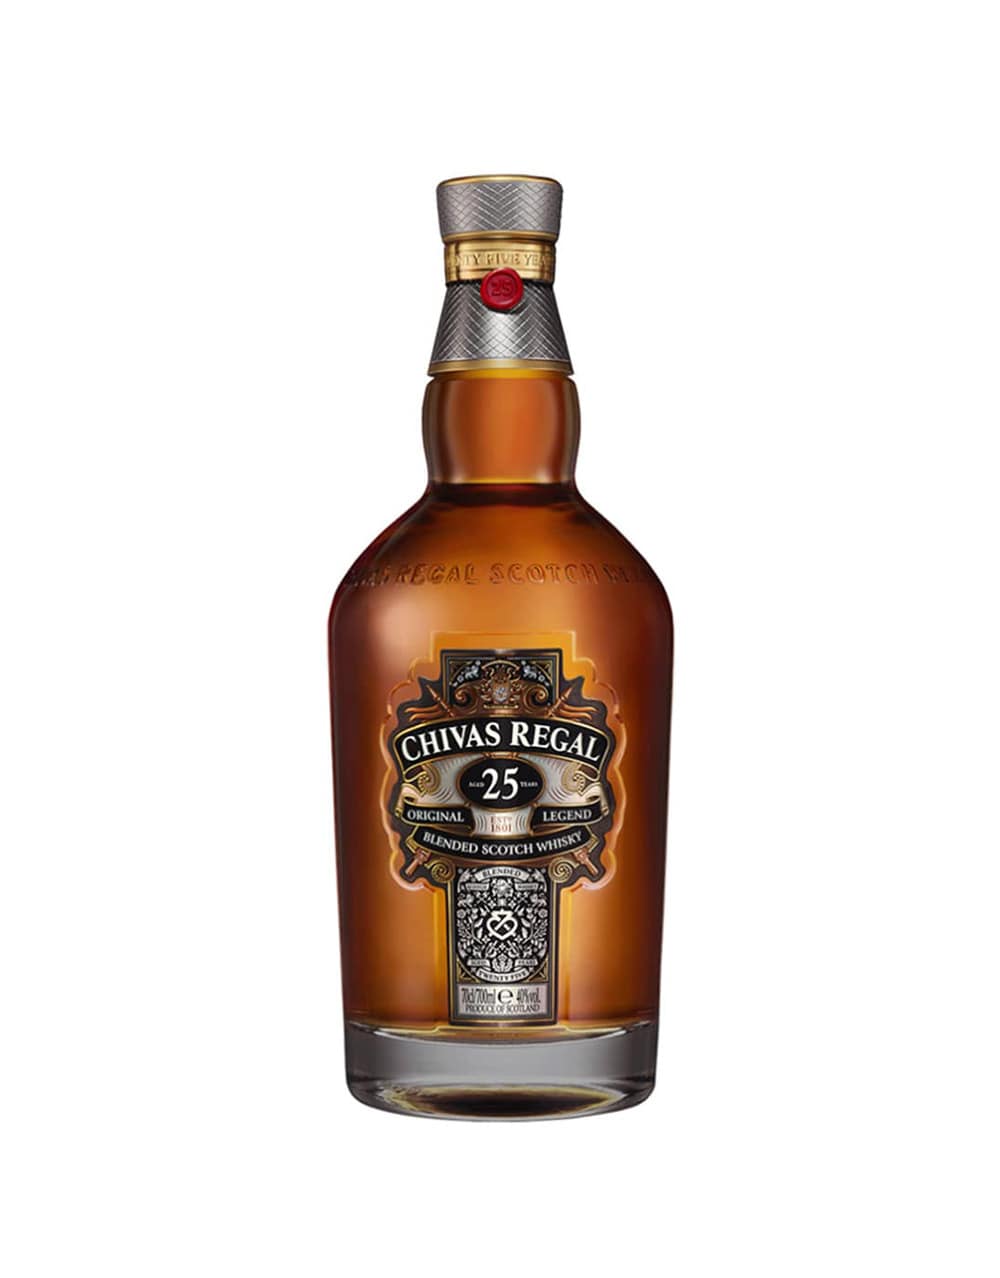 Chivas 25 Year Old Scotch Whisky